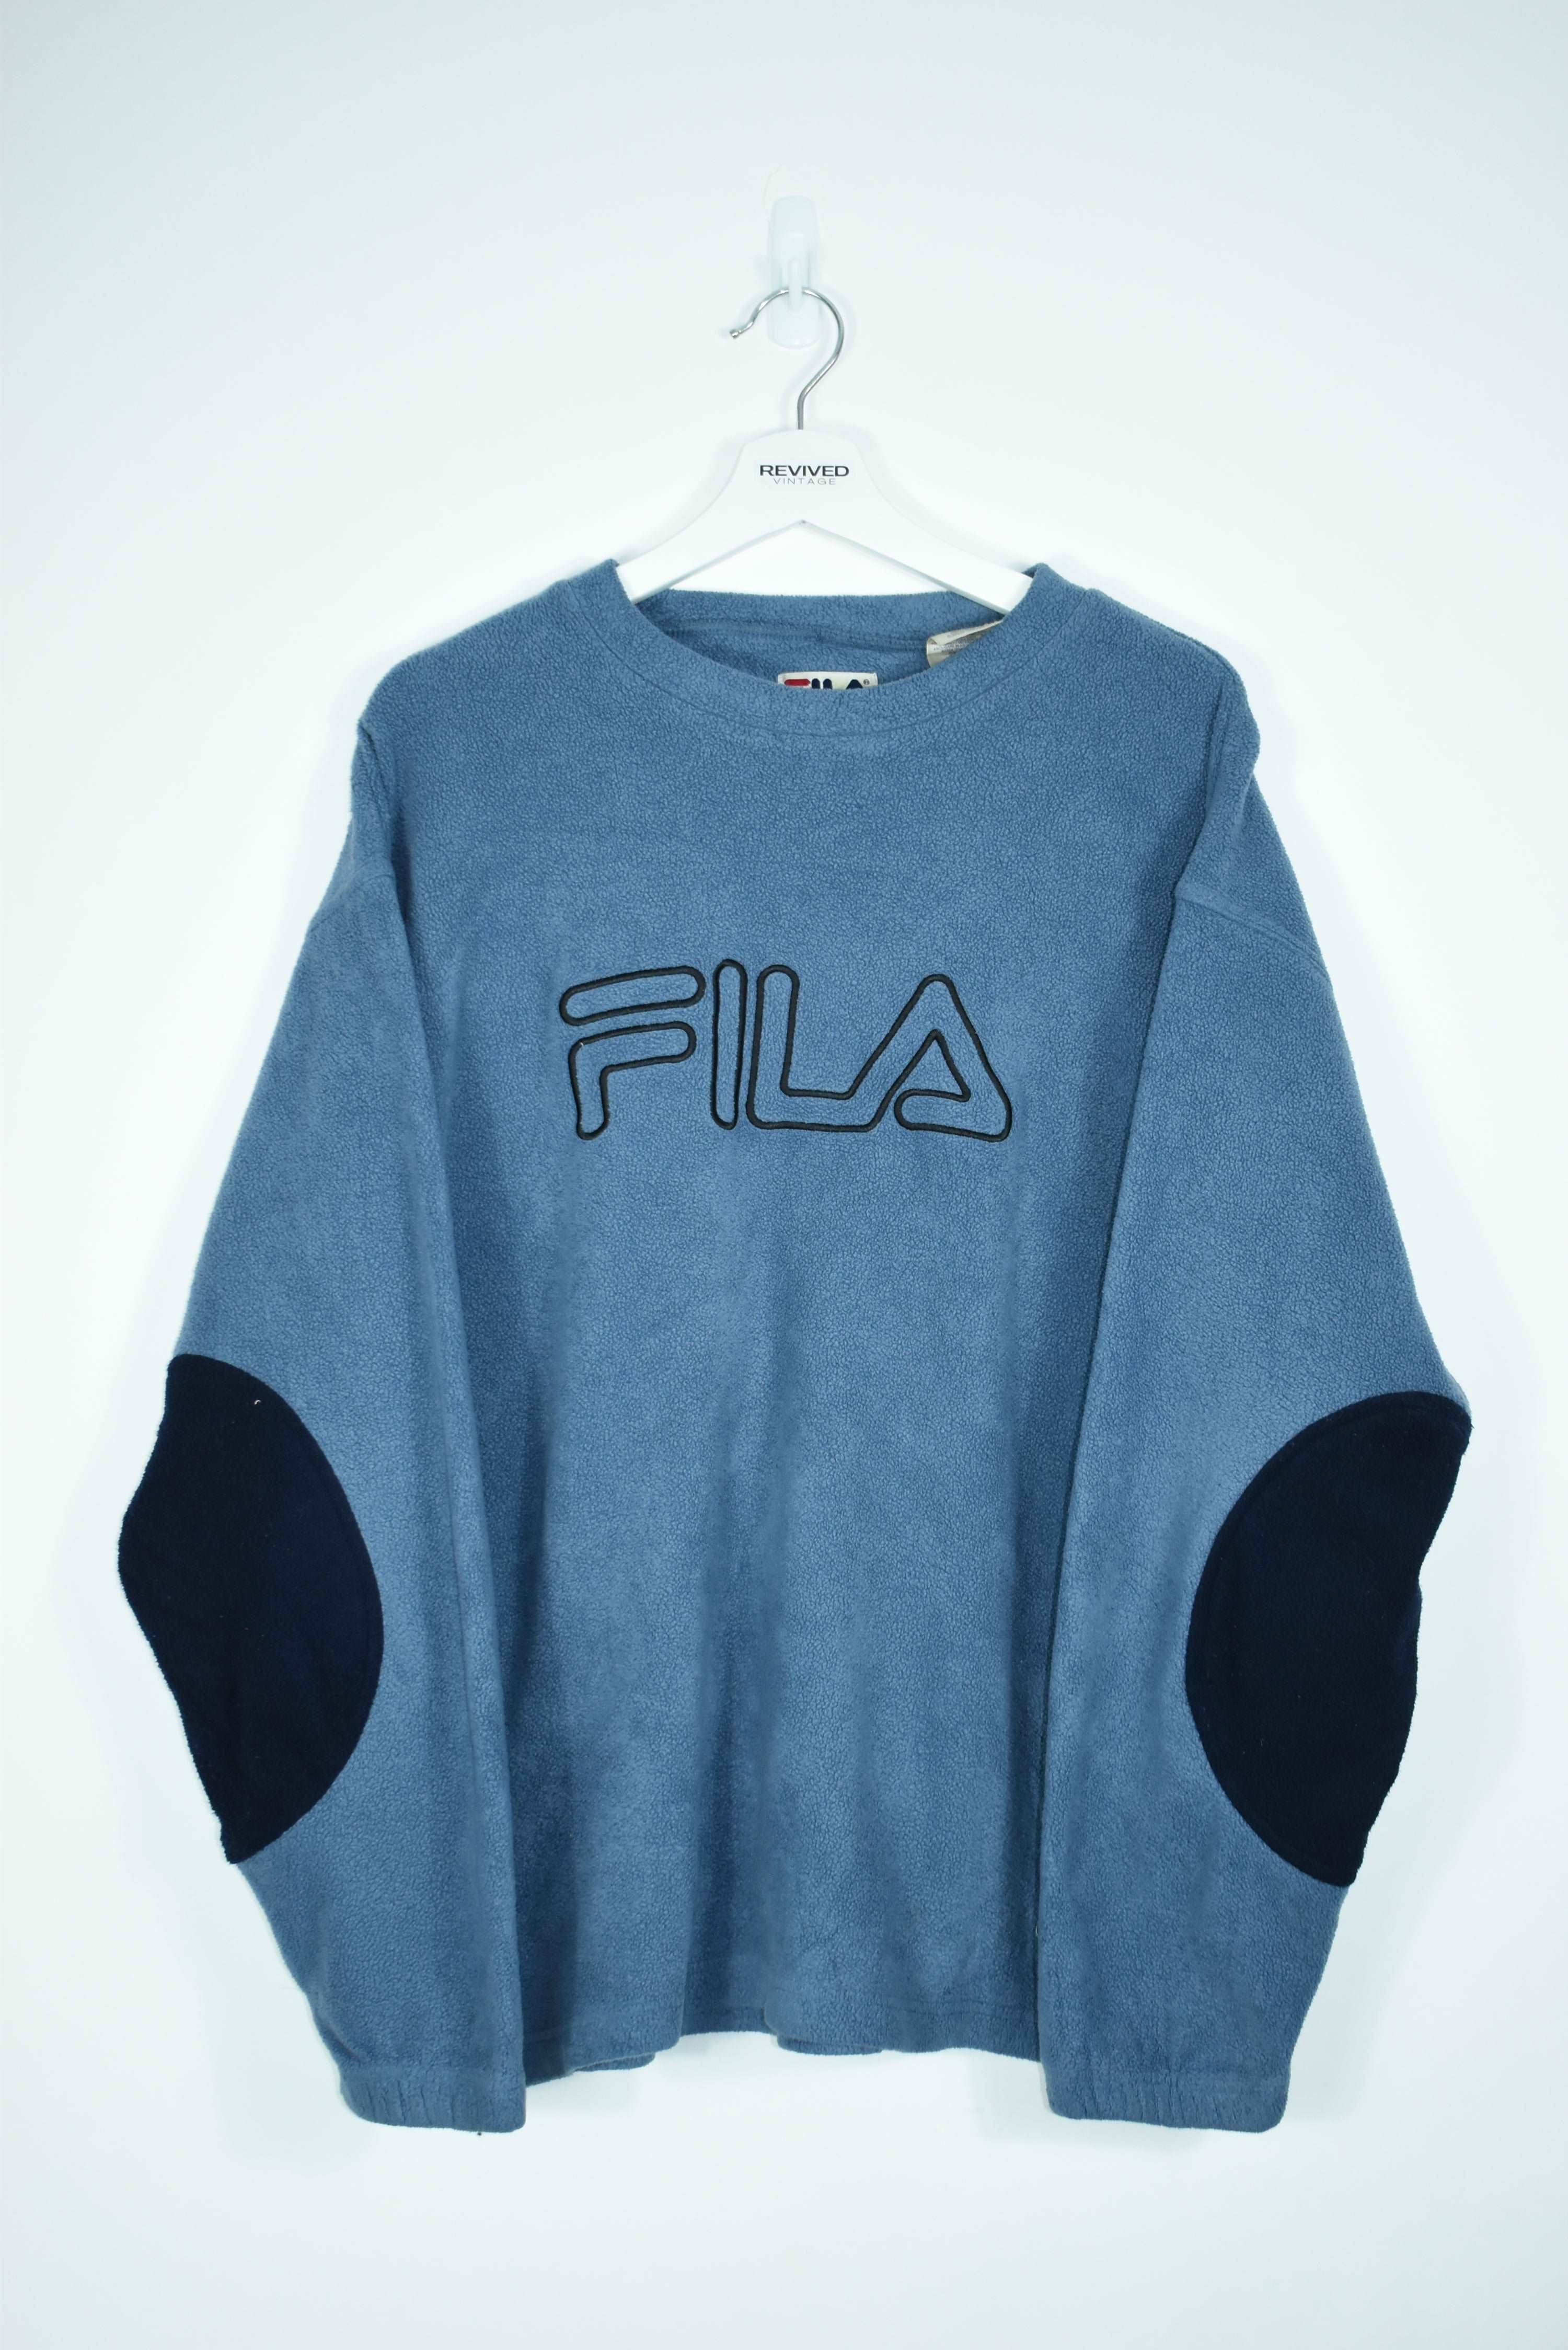 Vintage Fila Embroidered Fleece XL